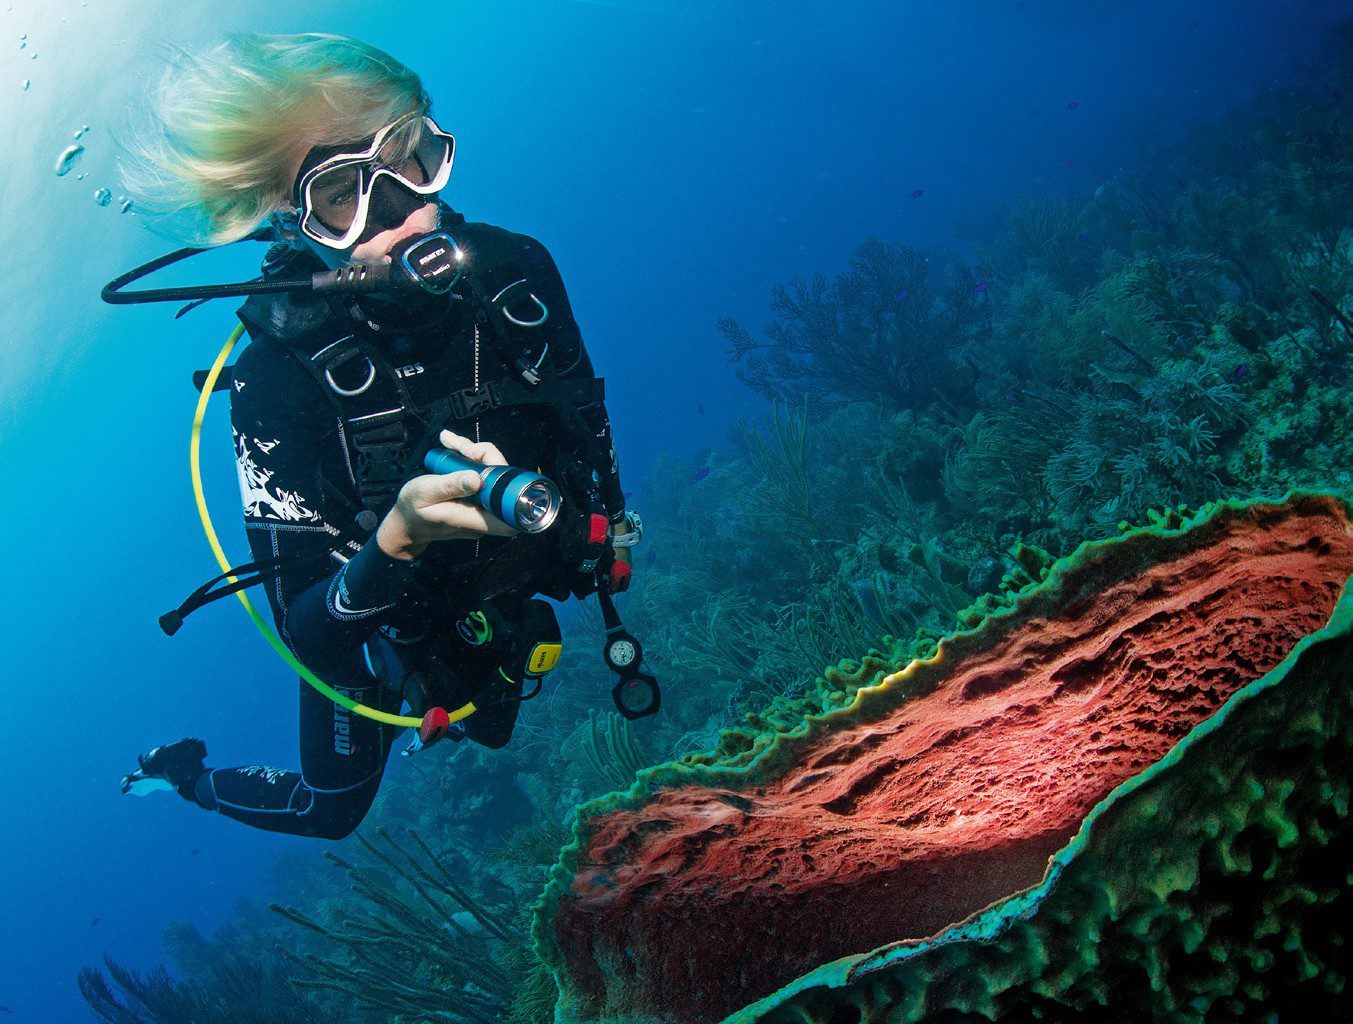 Scuba diver finding coral